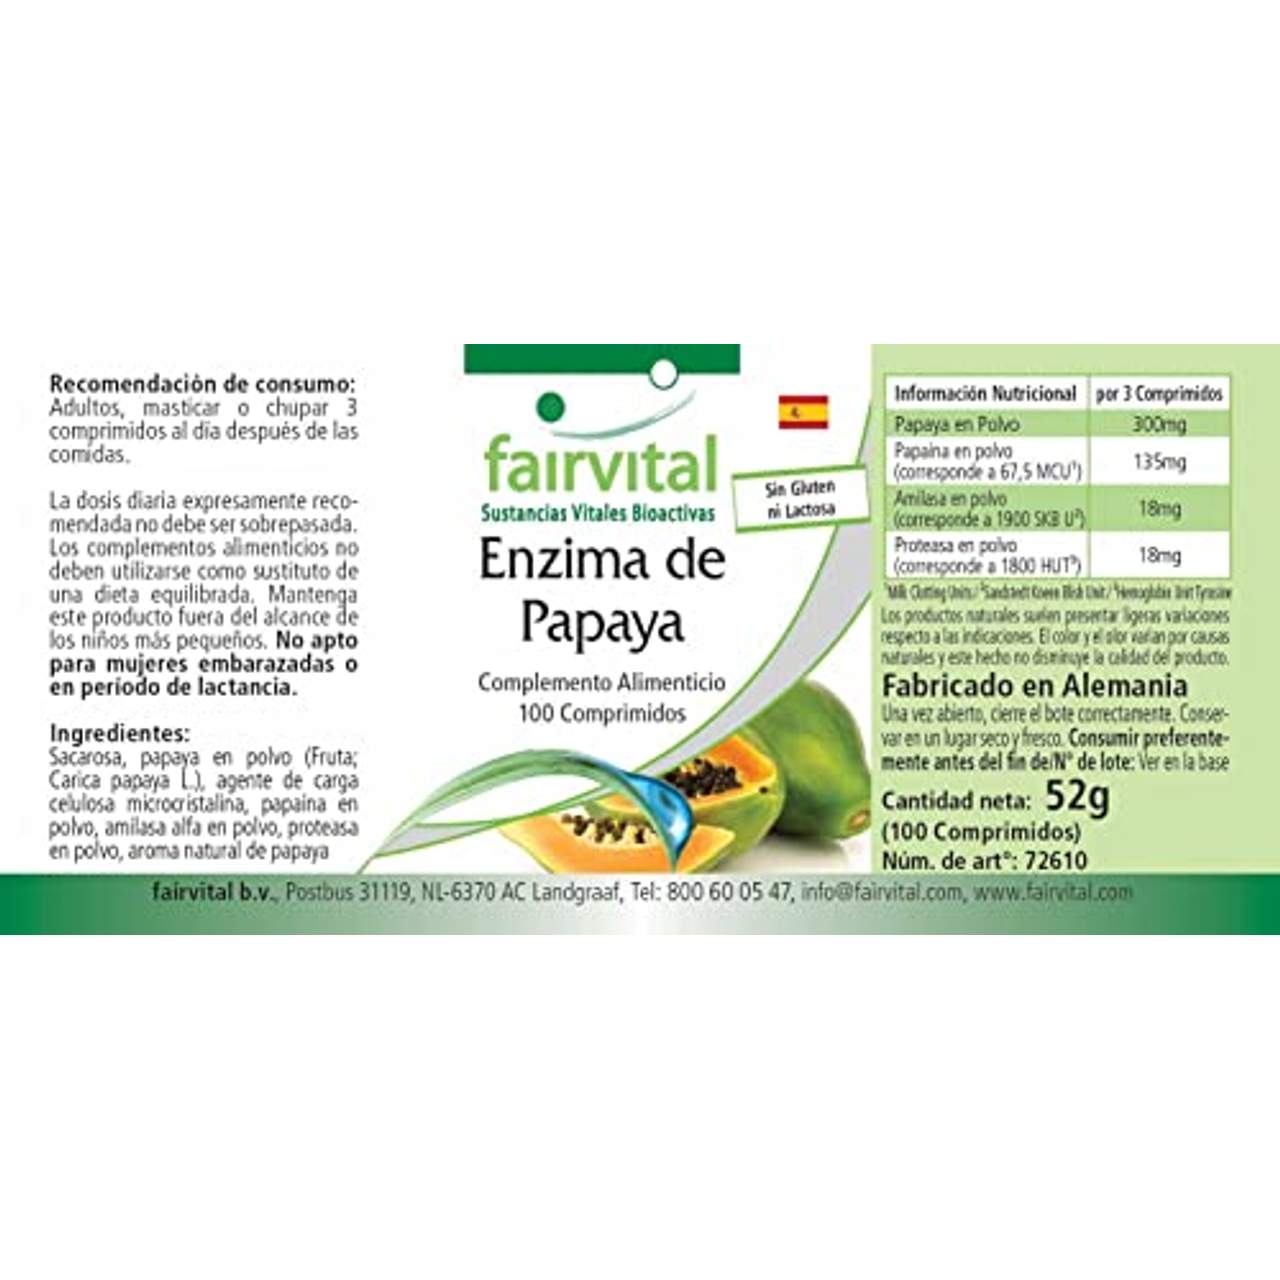 fairvital Papaya Enzym Tabletten